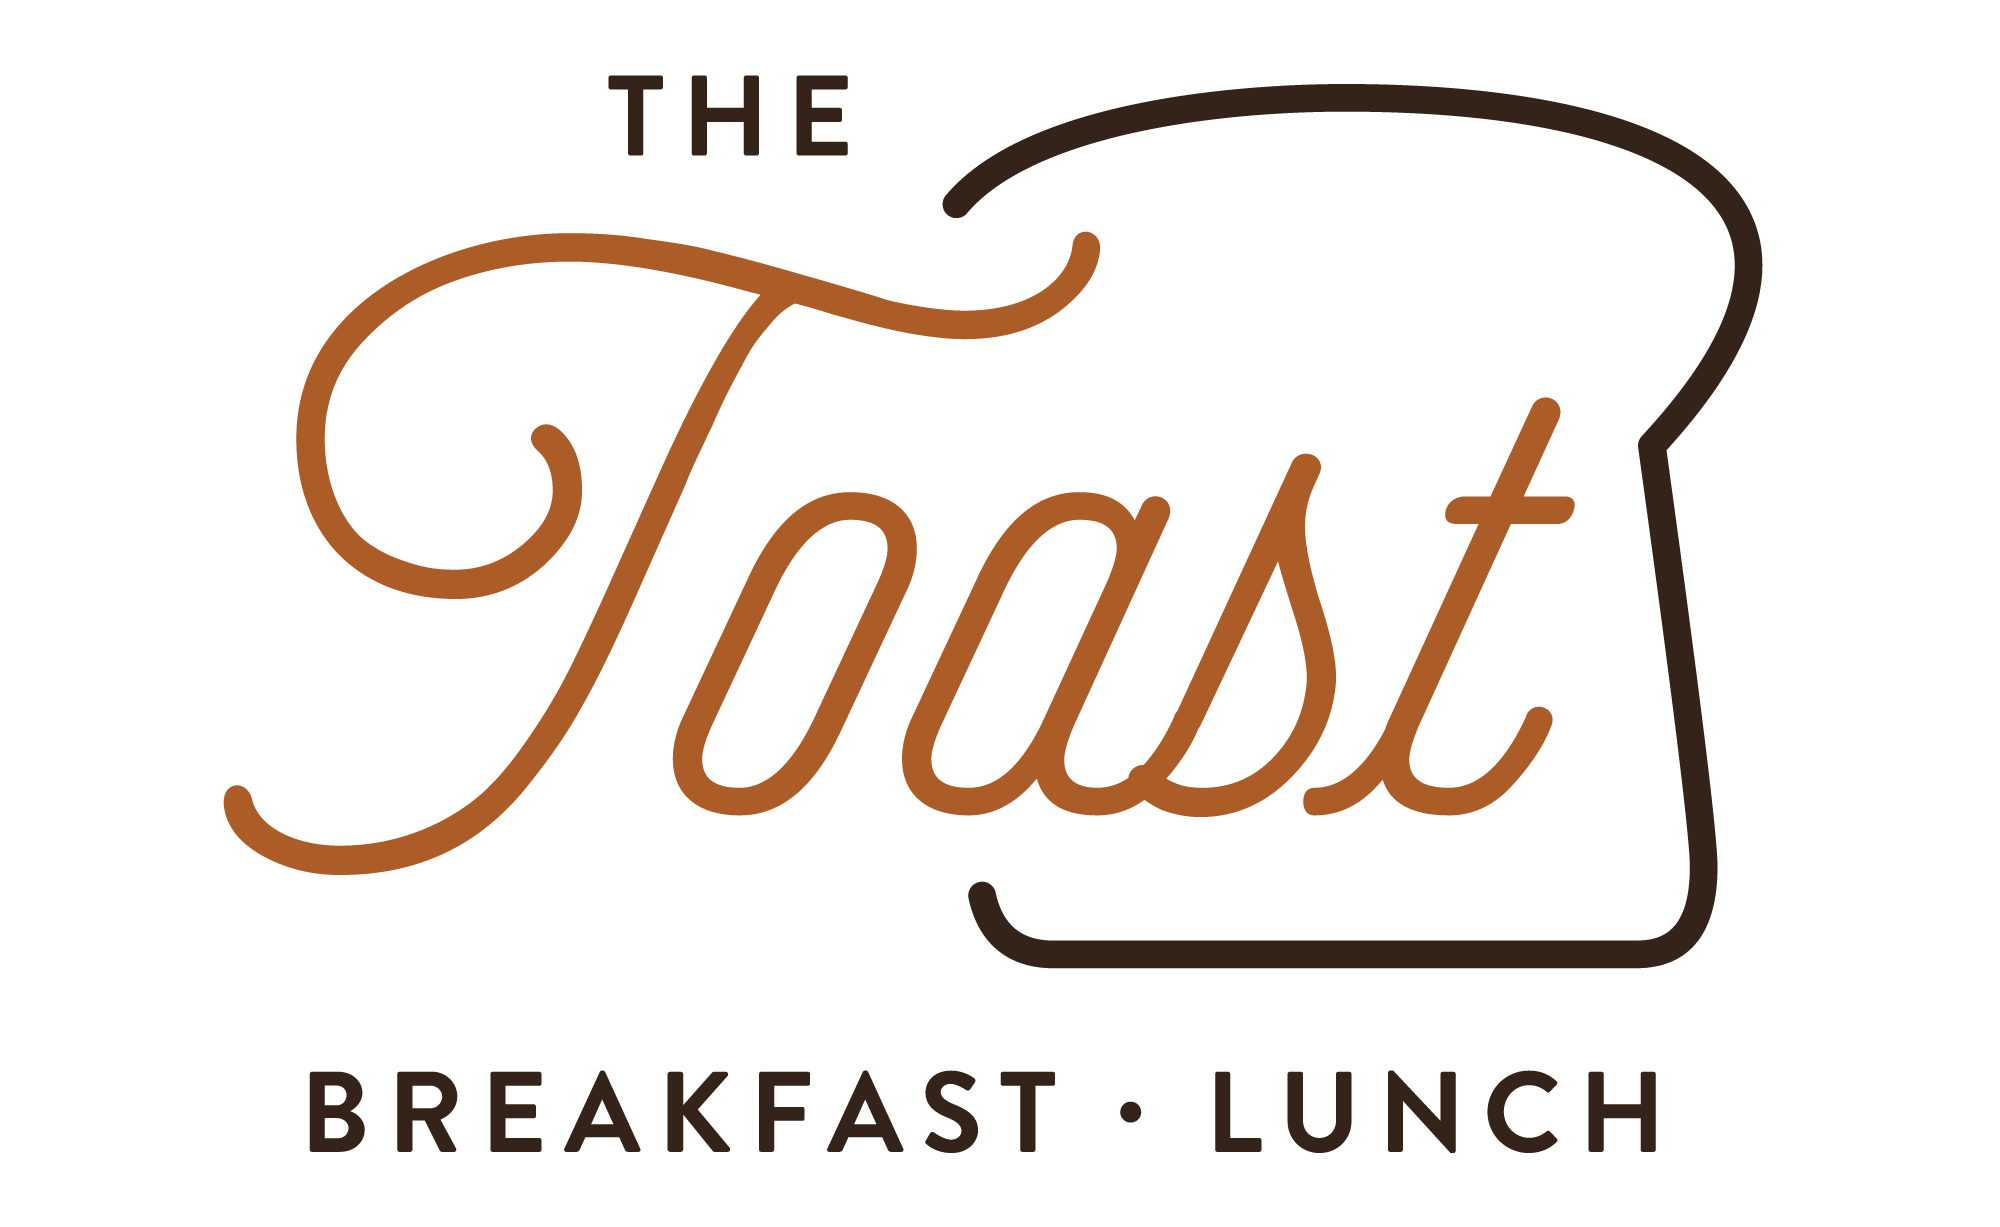 The Toast bakery logo on a white background